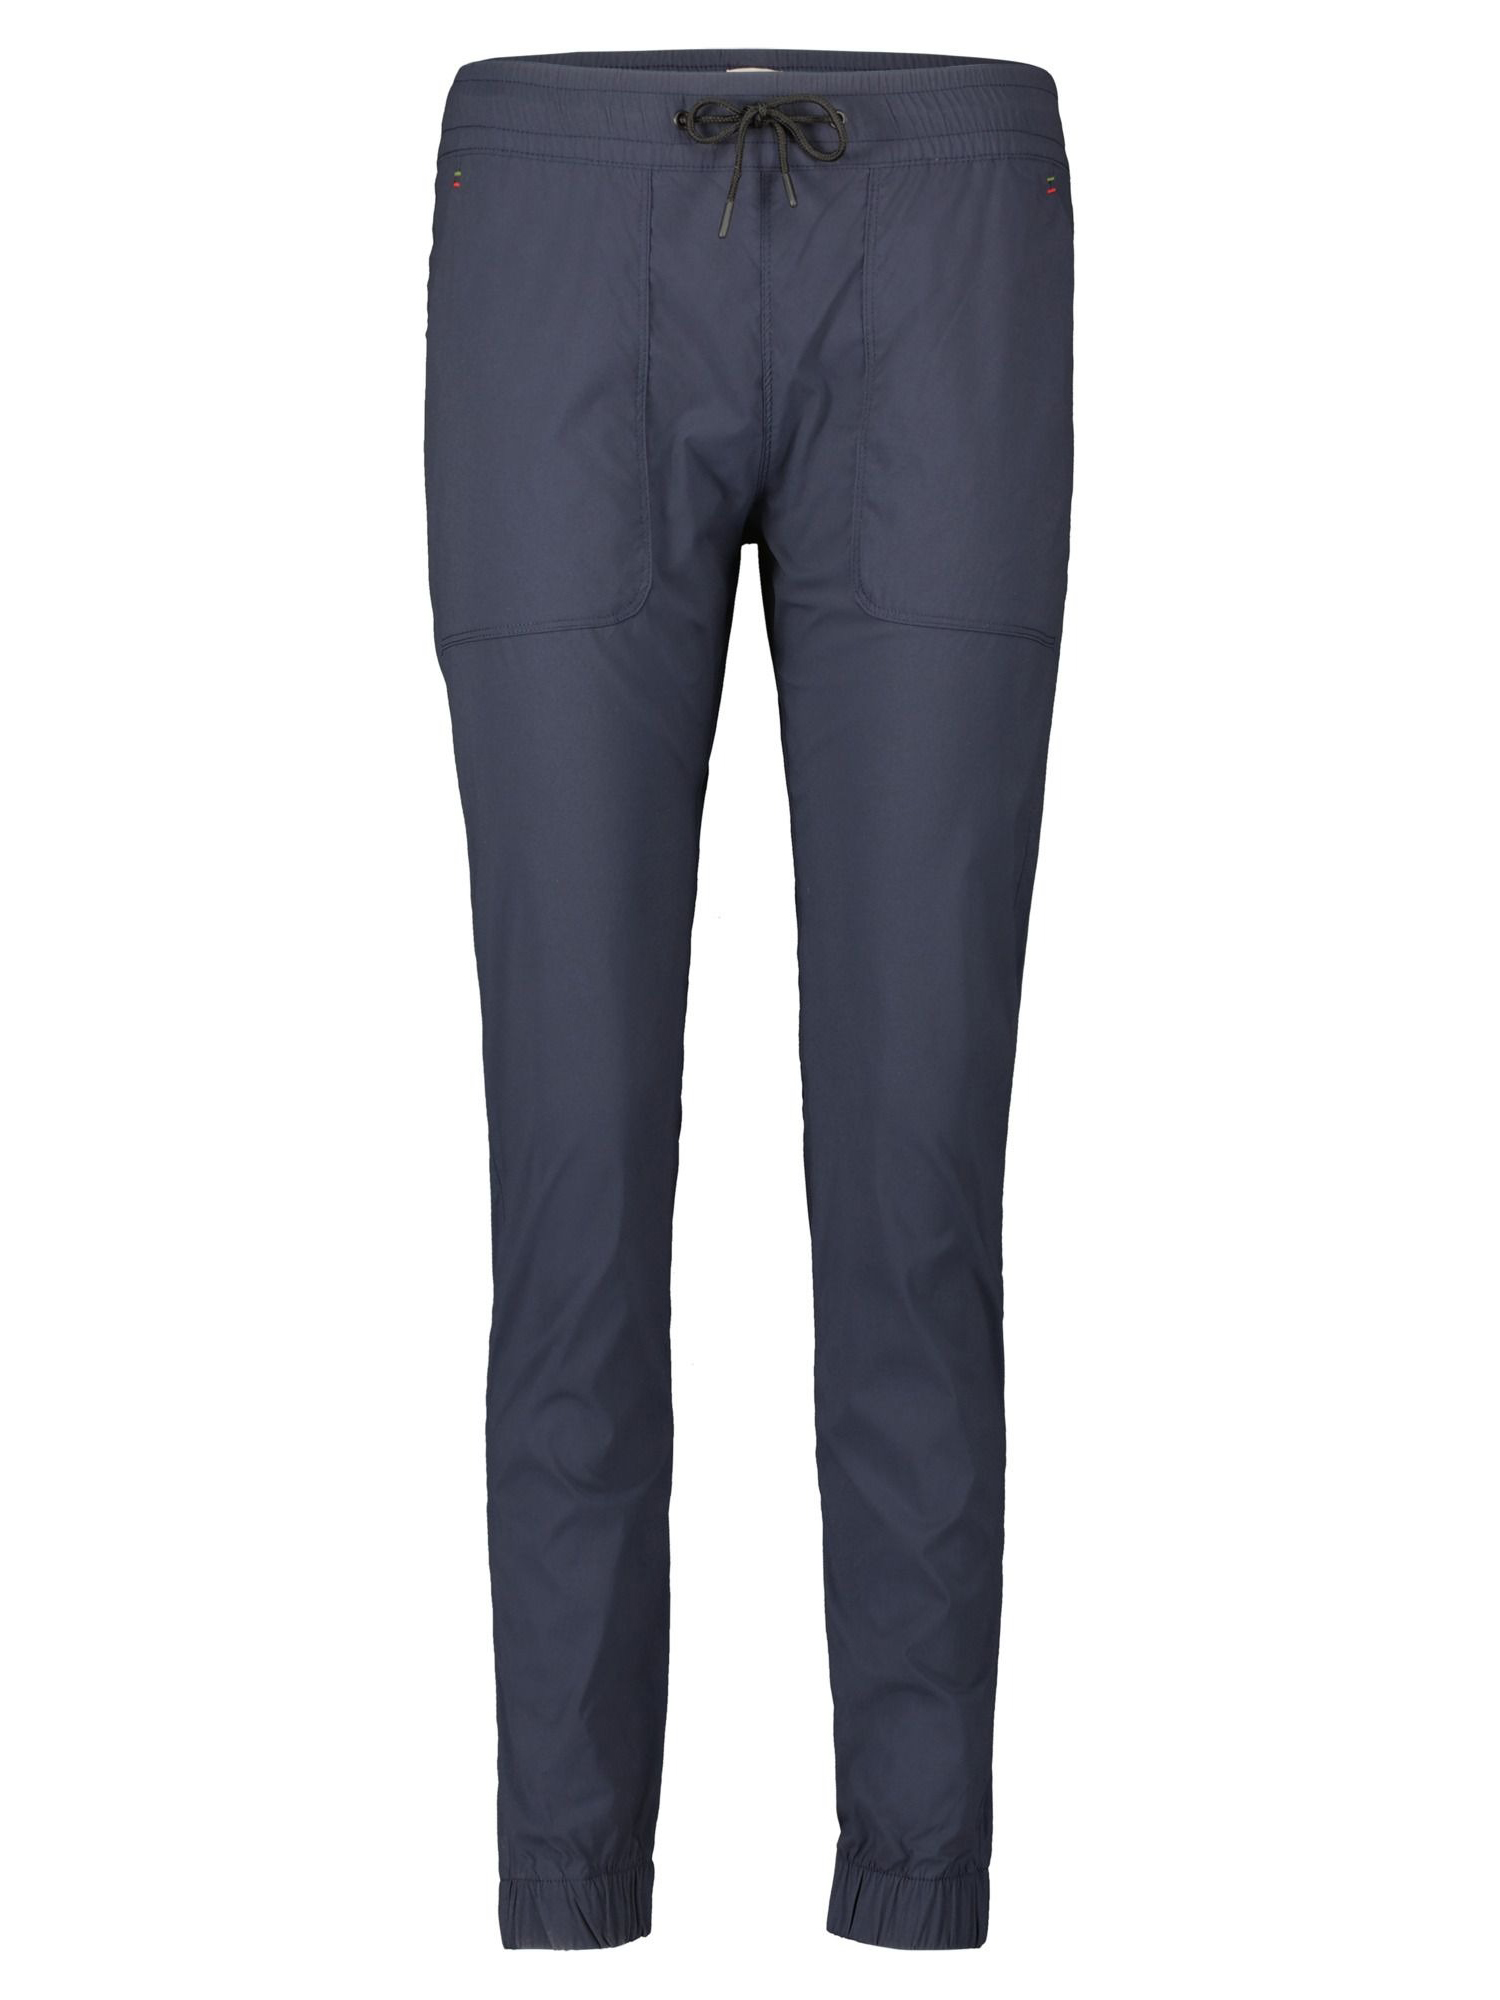 Спортивные брюки женские Dolomite Pants W's Corvara синие L